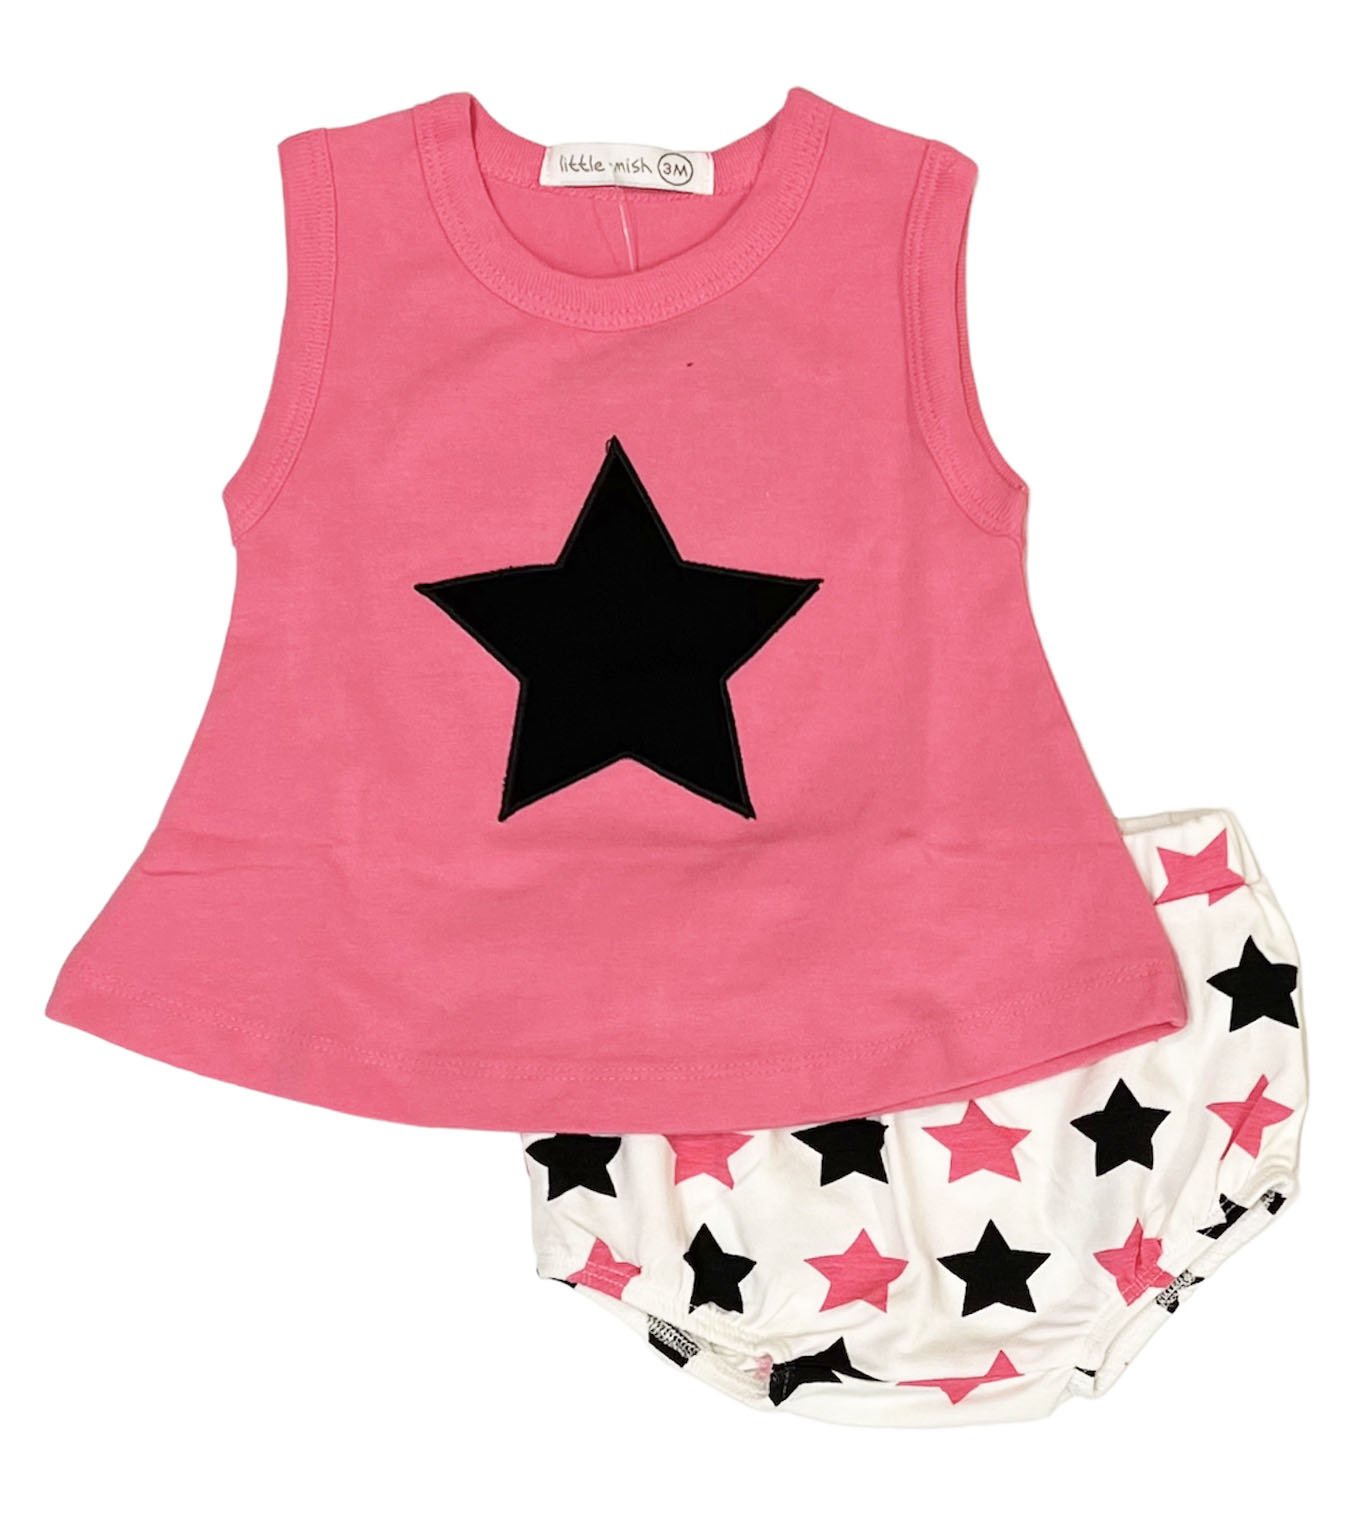 Little Mish Pink Star Swing Set